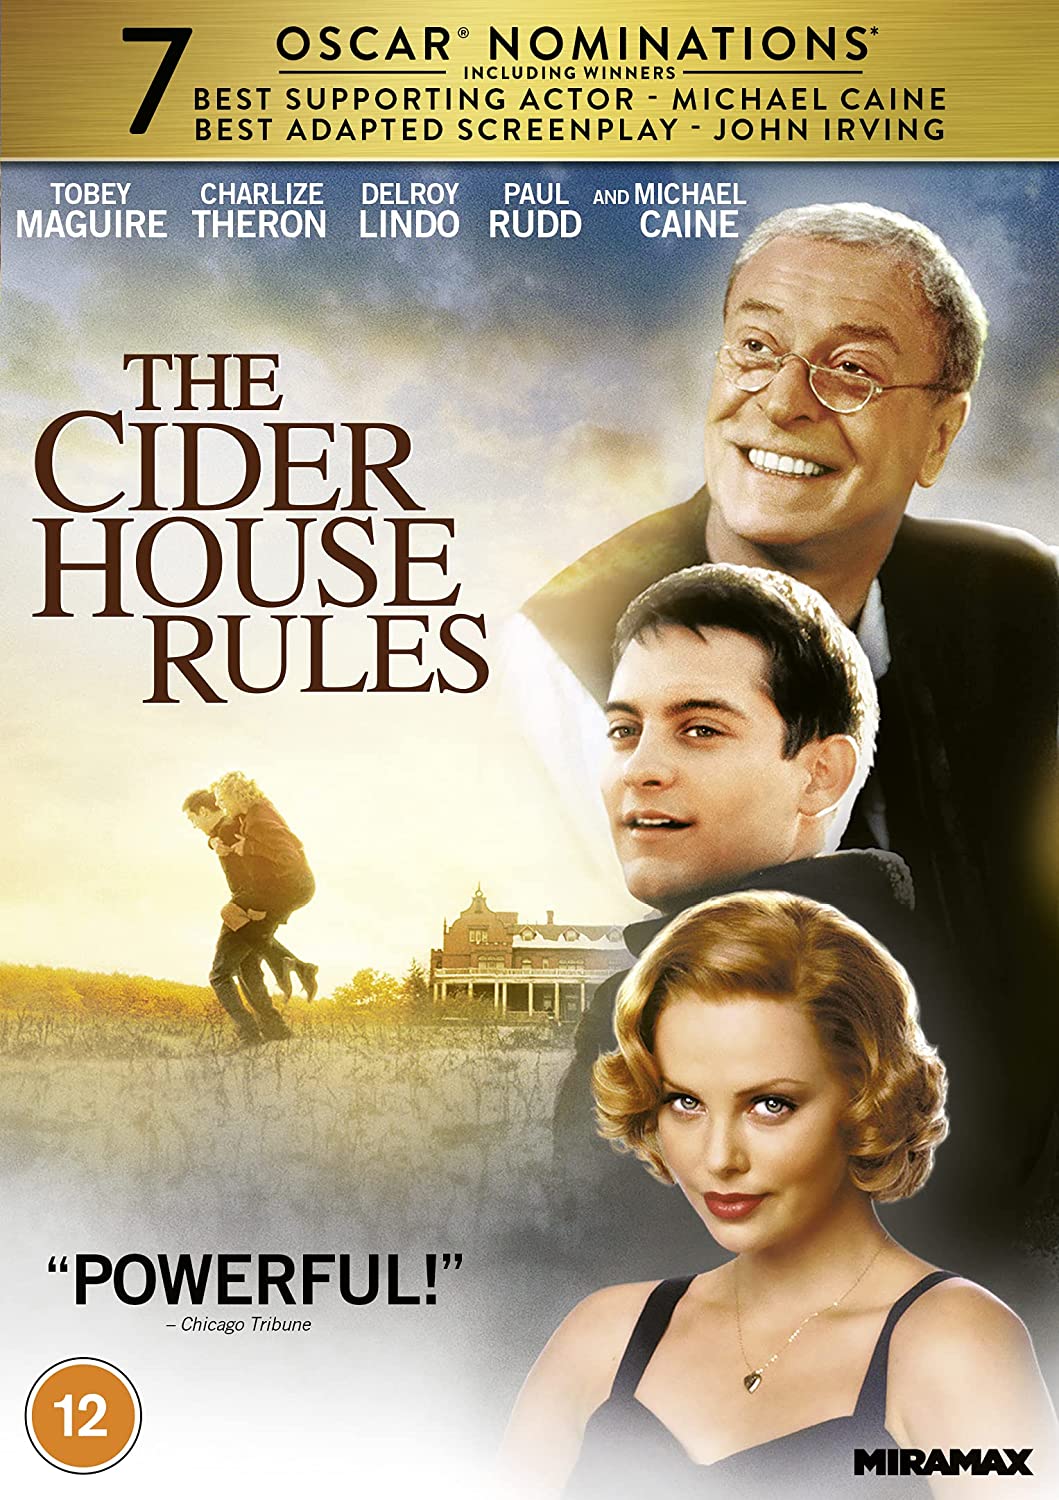 The Cider House Rules - Drama/Romance [DVD]